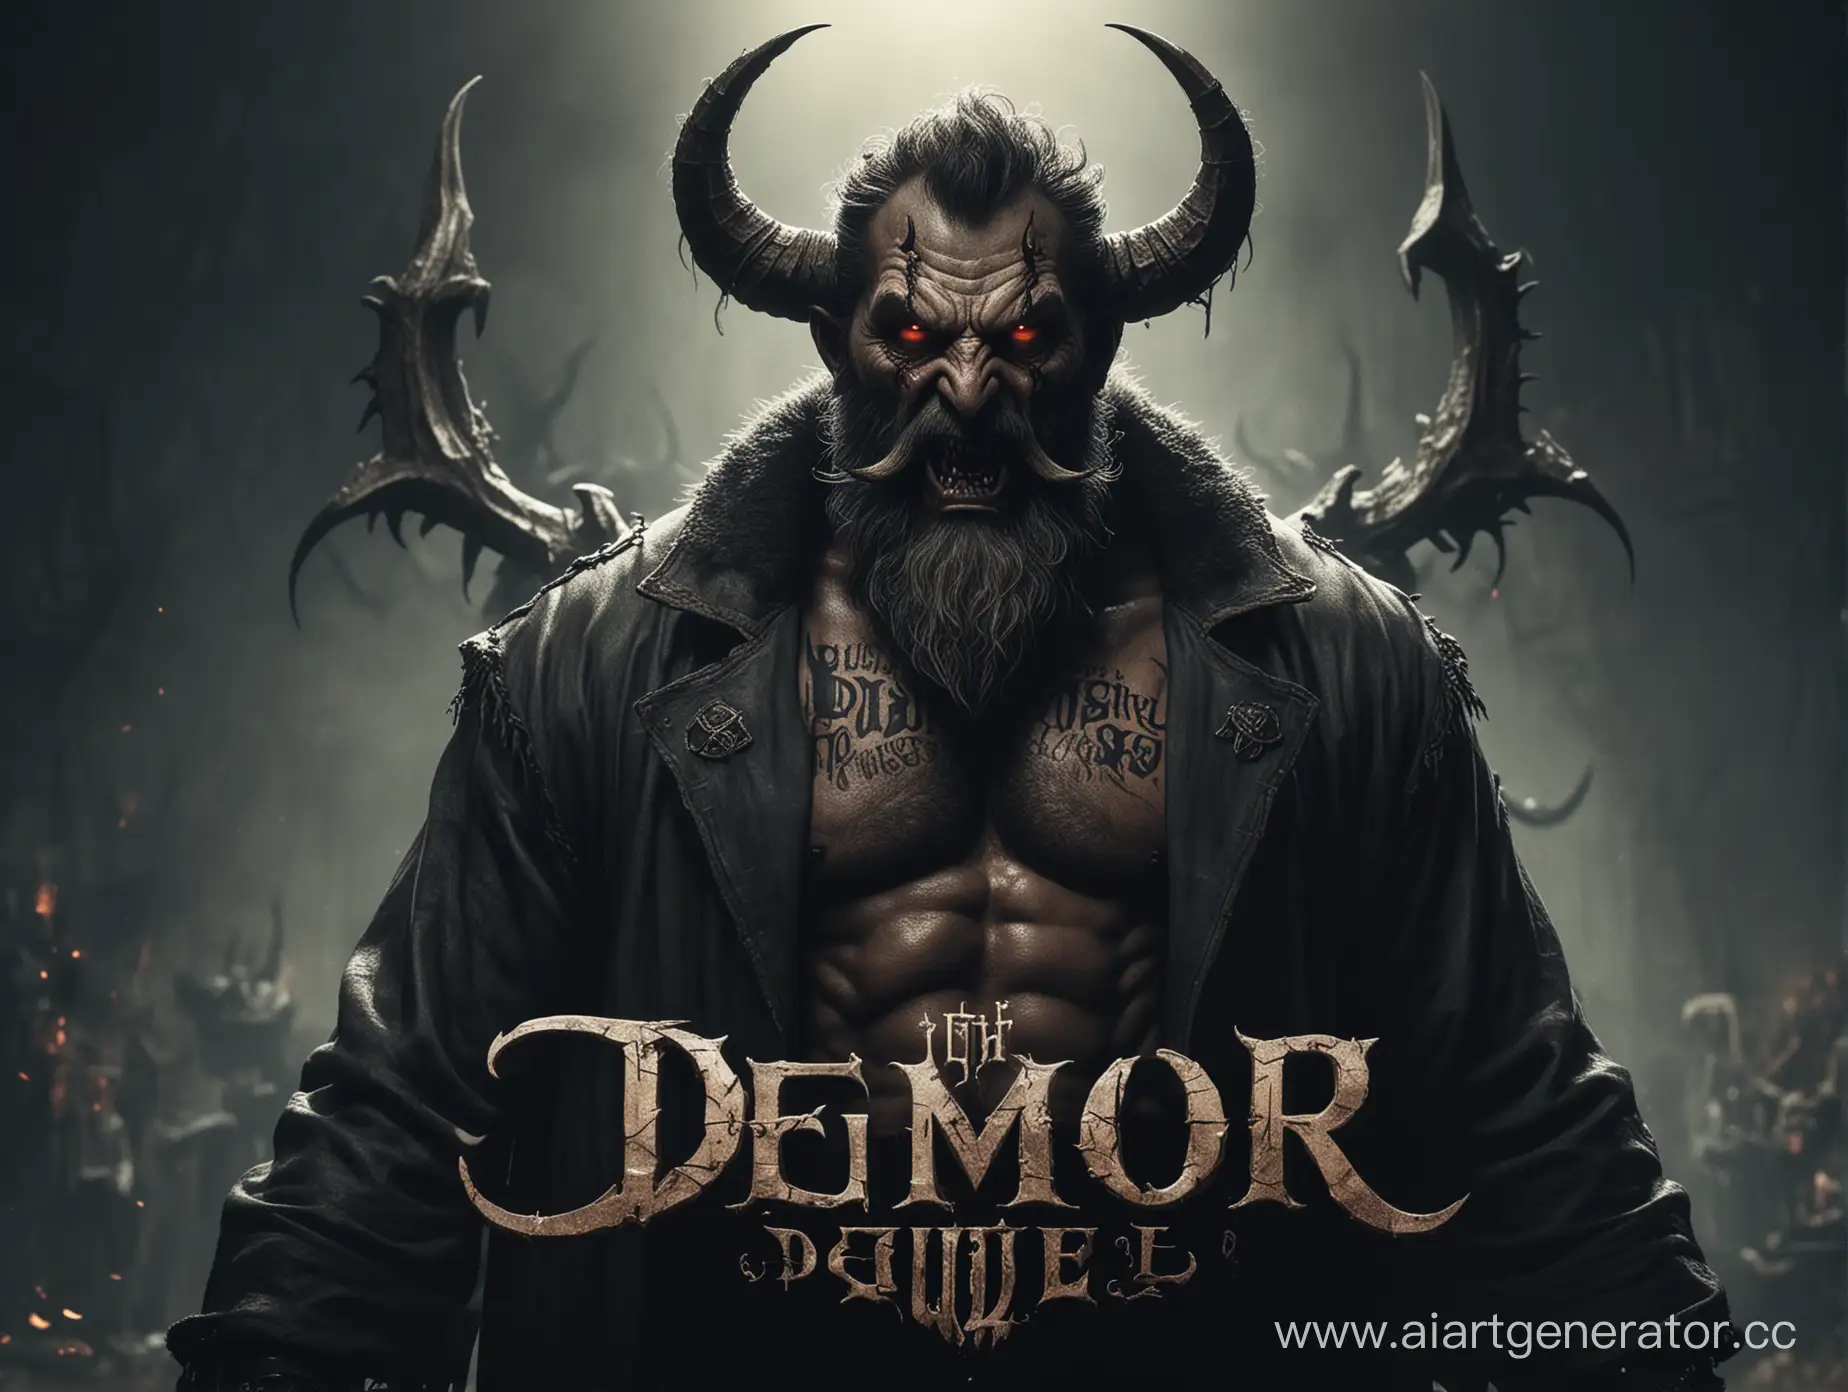 4k picture, 1920 by 1080, Gumer logo, demon,Devil, with beard, GUMER chest inscription, hell